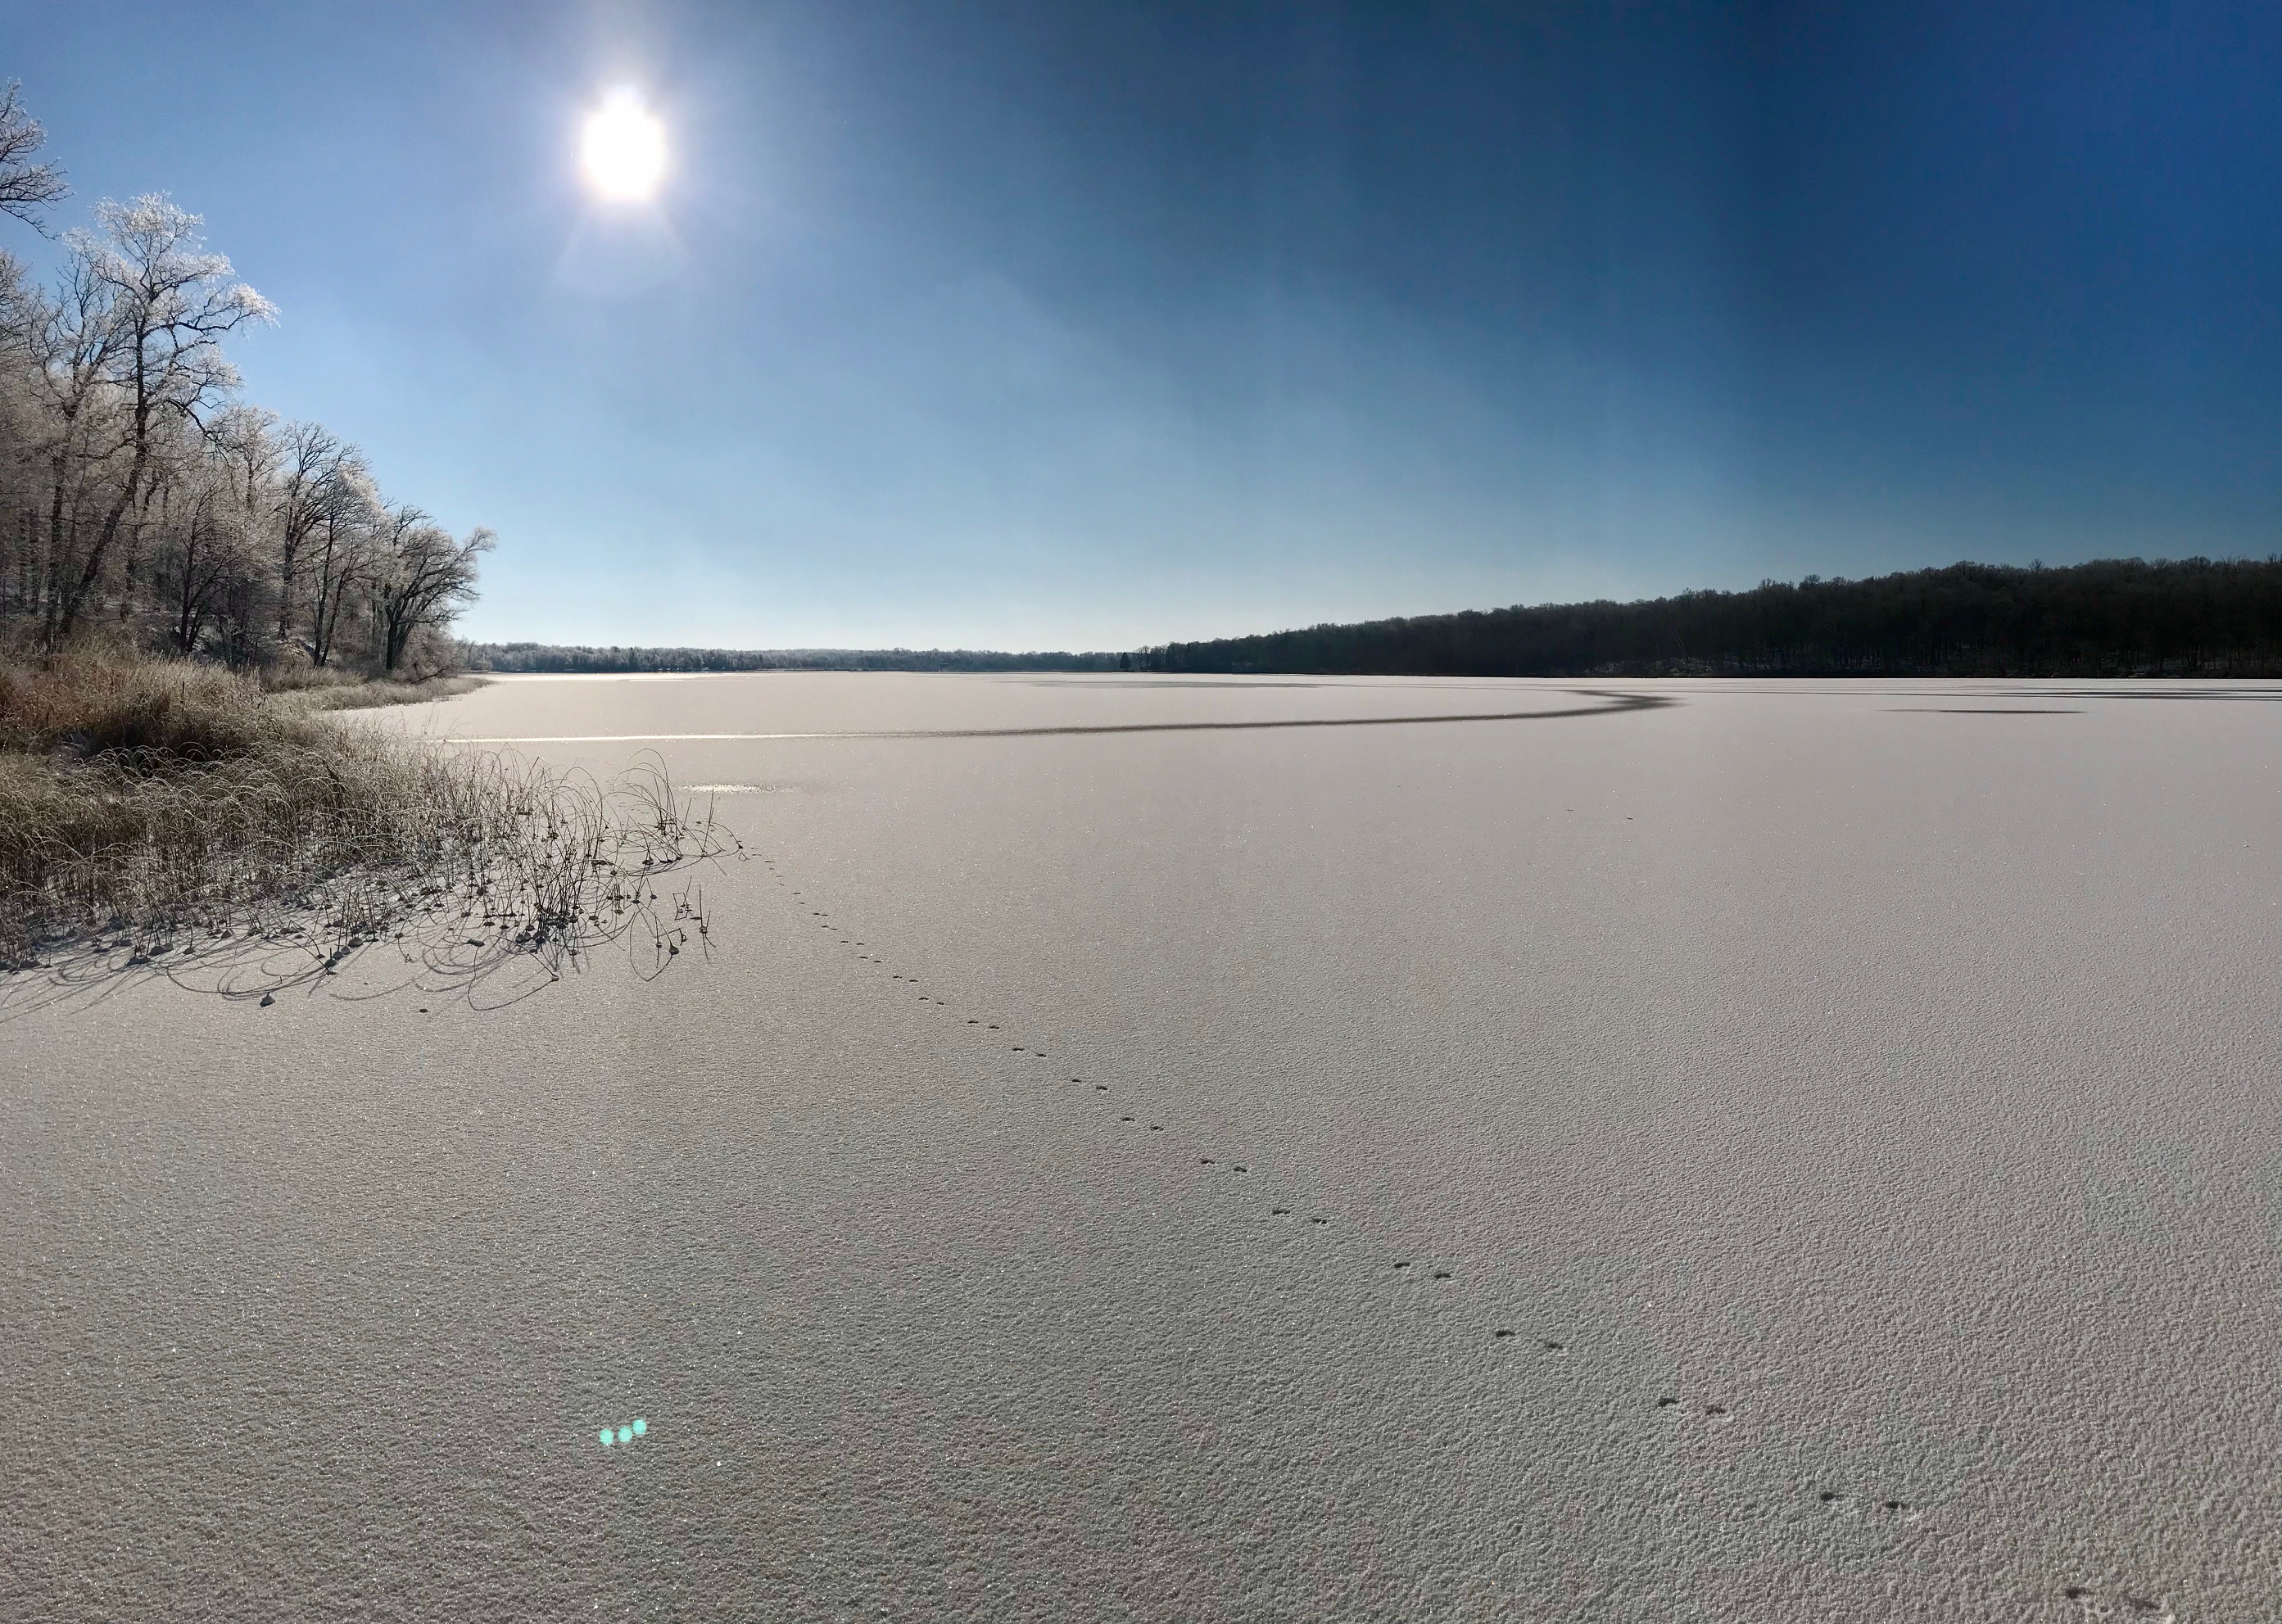 Frosty morning over frozen Little Sugarbush Lake, November 7th, 2017.